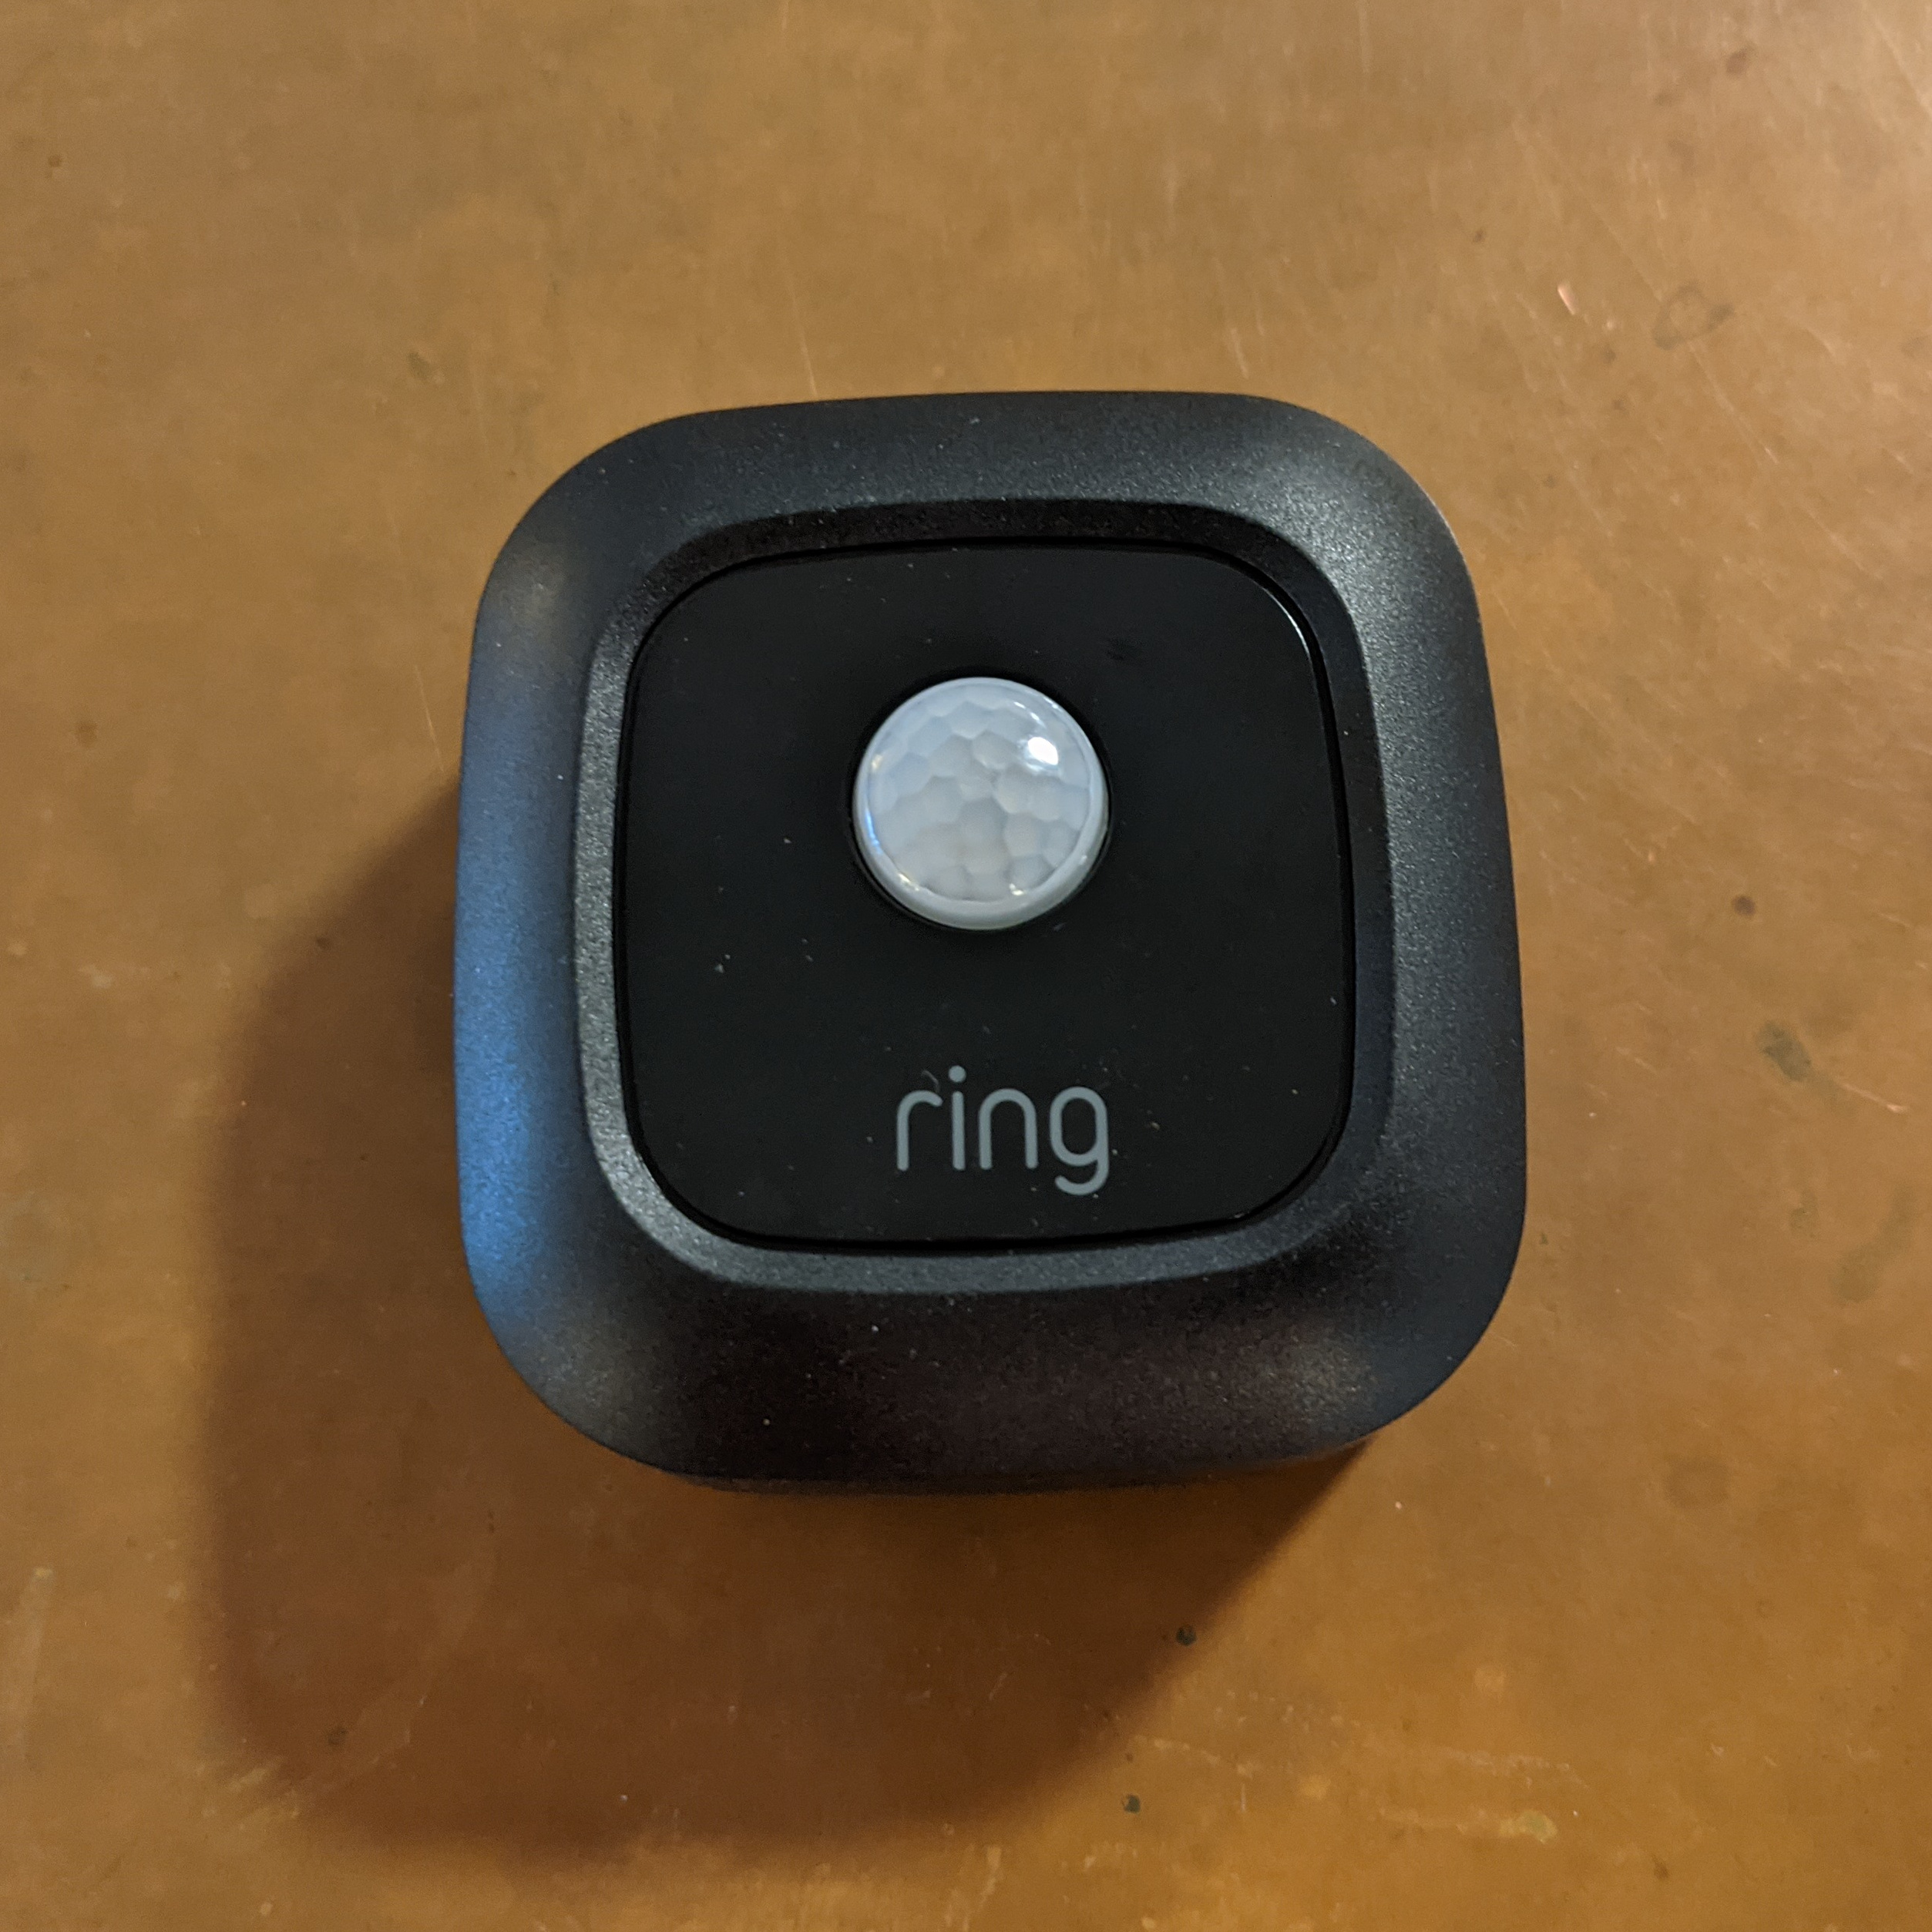 Ring Mailbox Sensor Review